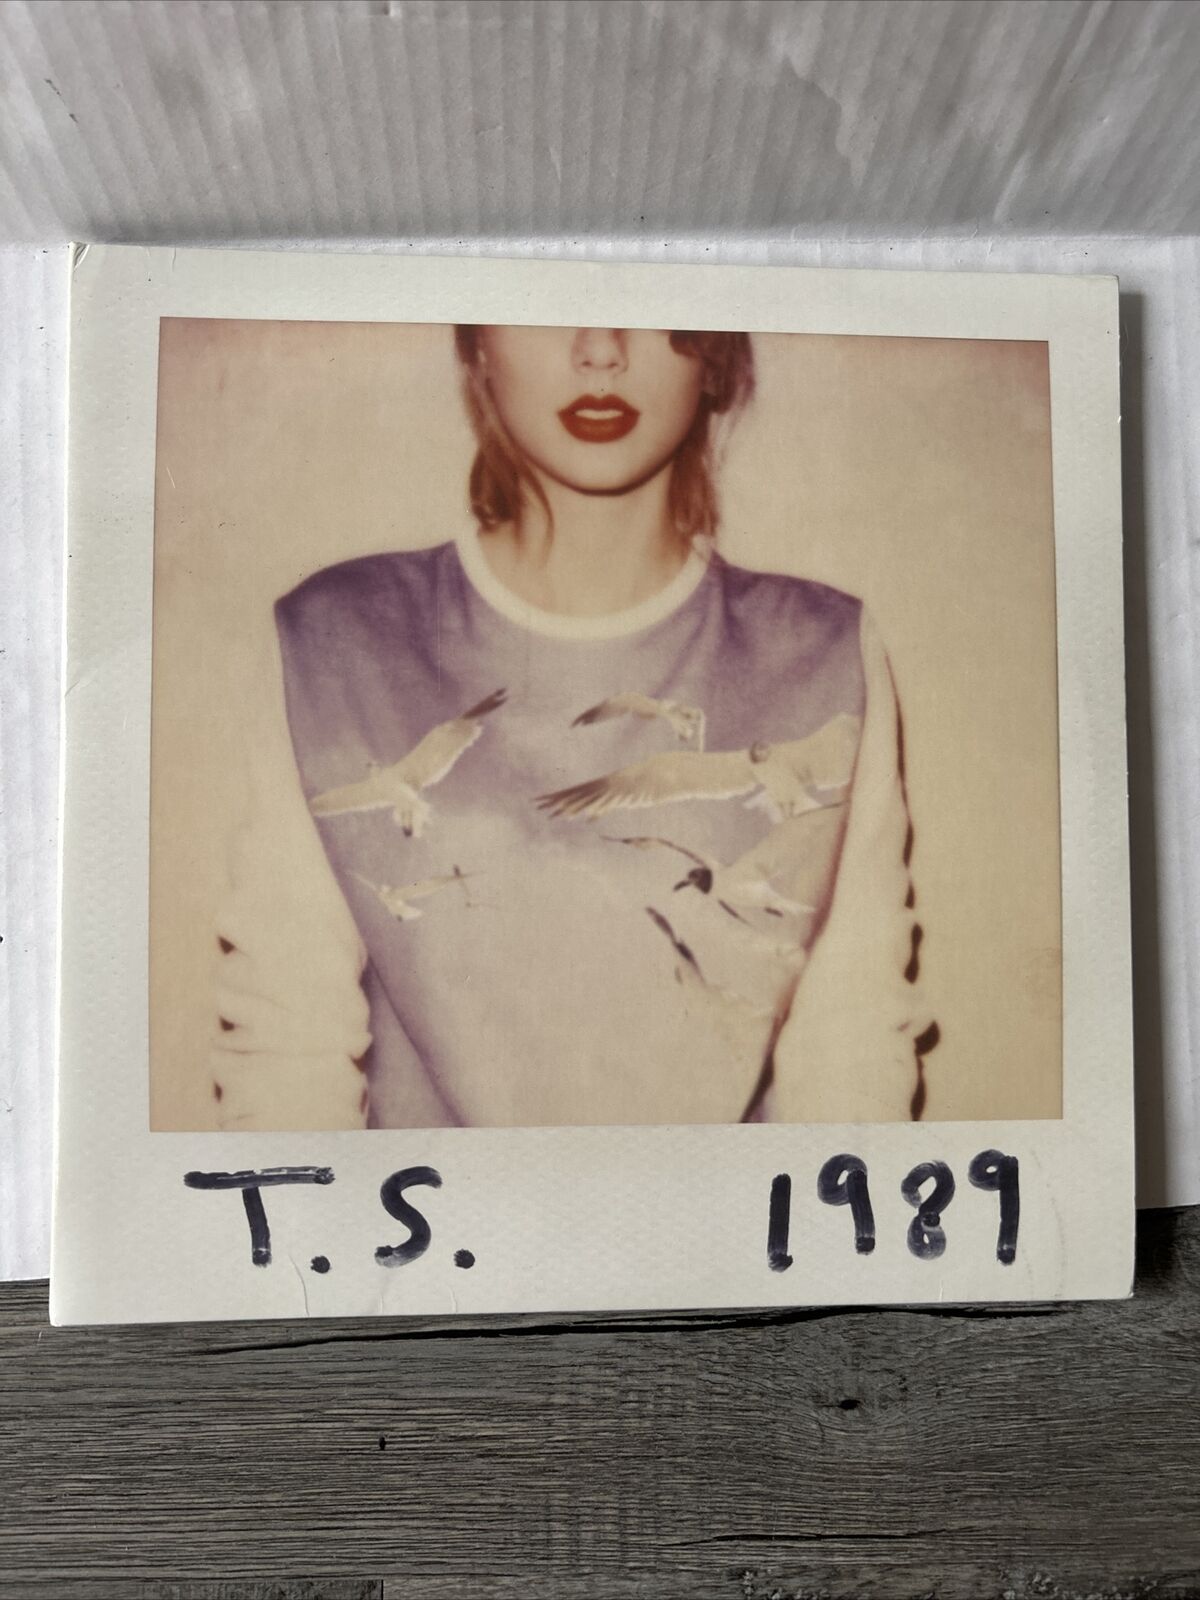 Taylor Swift "1989" DOUBLE Vinyl LP BIG MACHINE RECORDS 2014